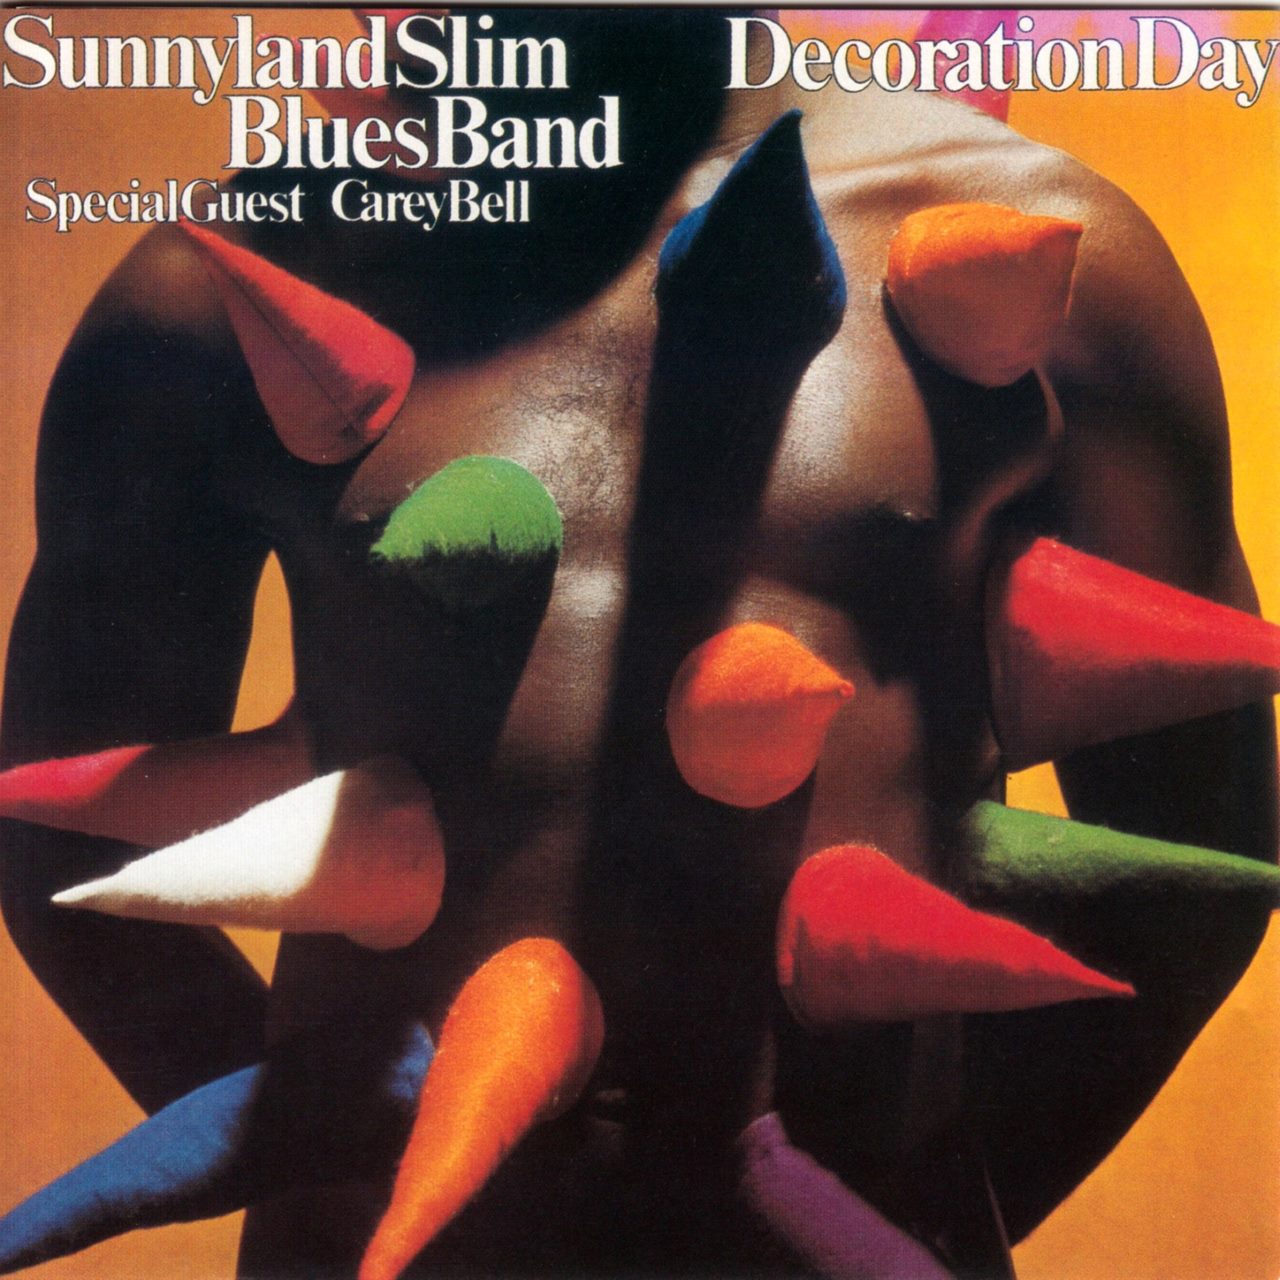 Sunnyland Slim Blues Band – Decoration Day cover album